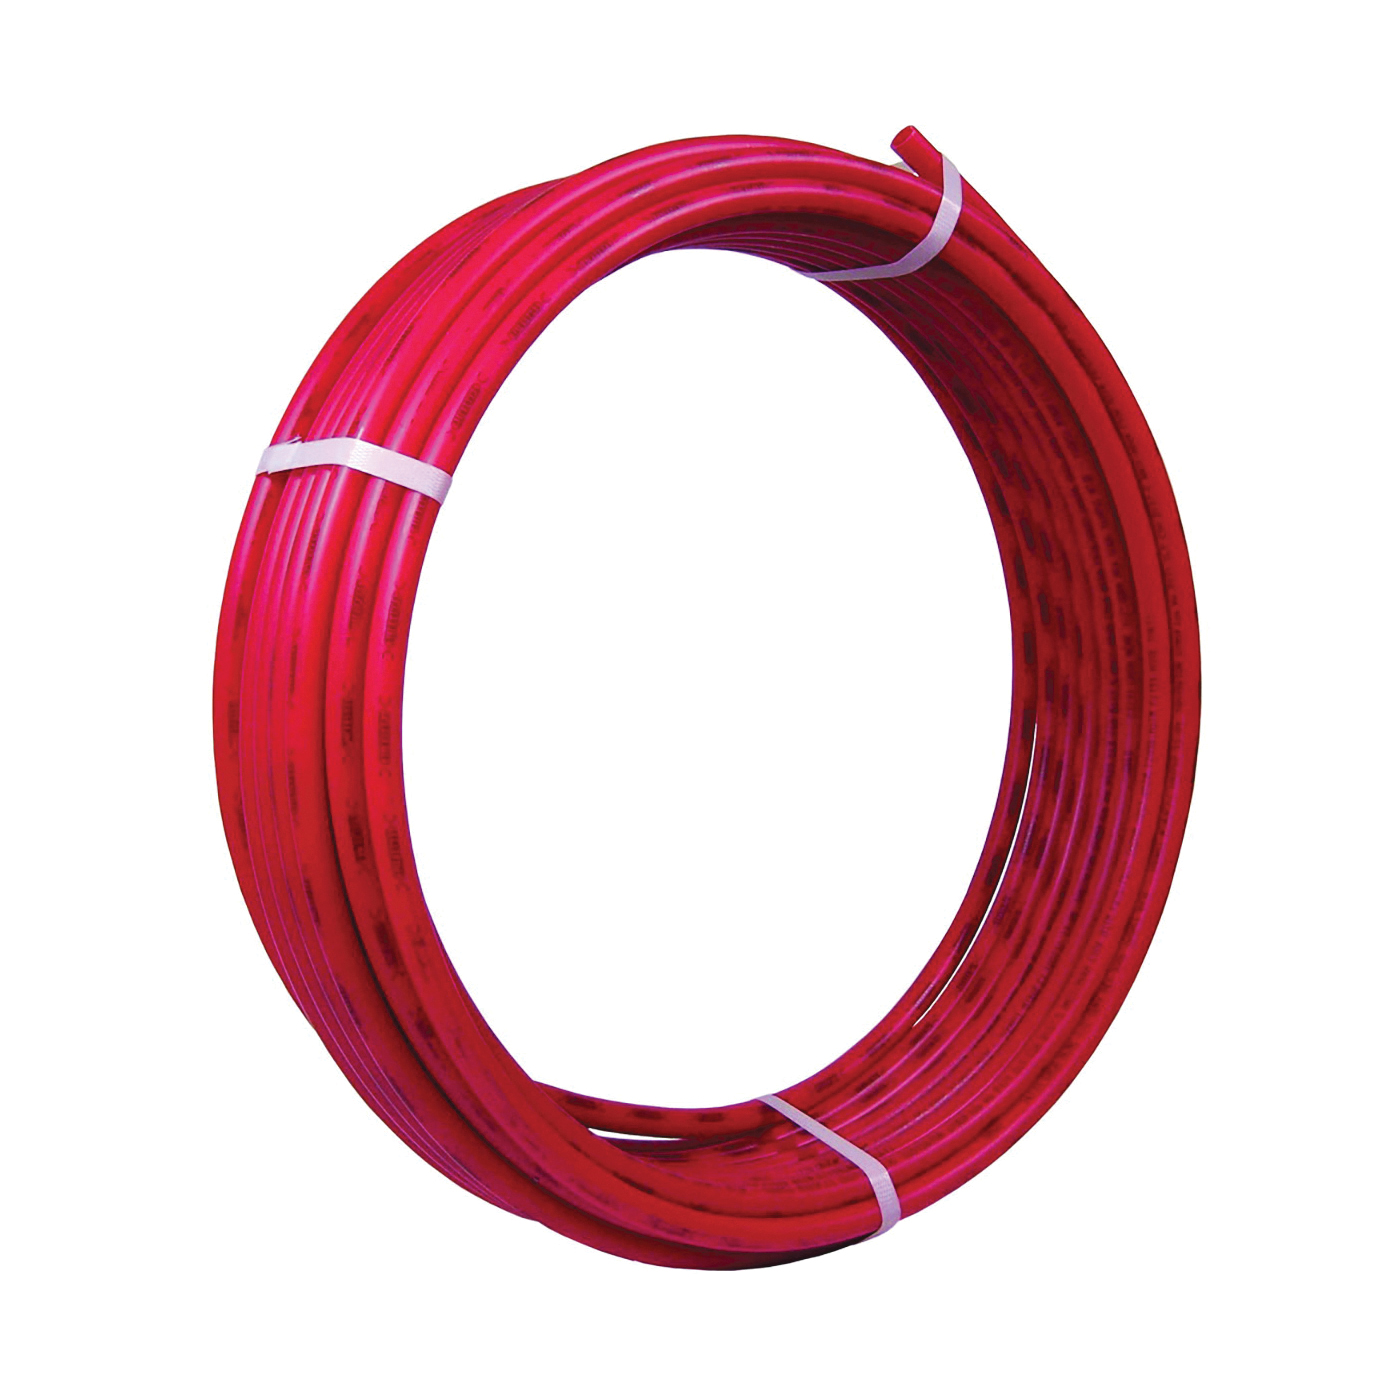 APPR30012 PEX-B Pipe Tubing, 1/2 in, Red, 300 ft L